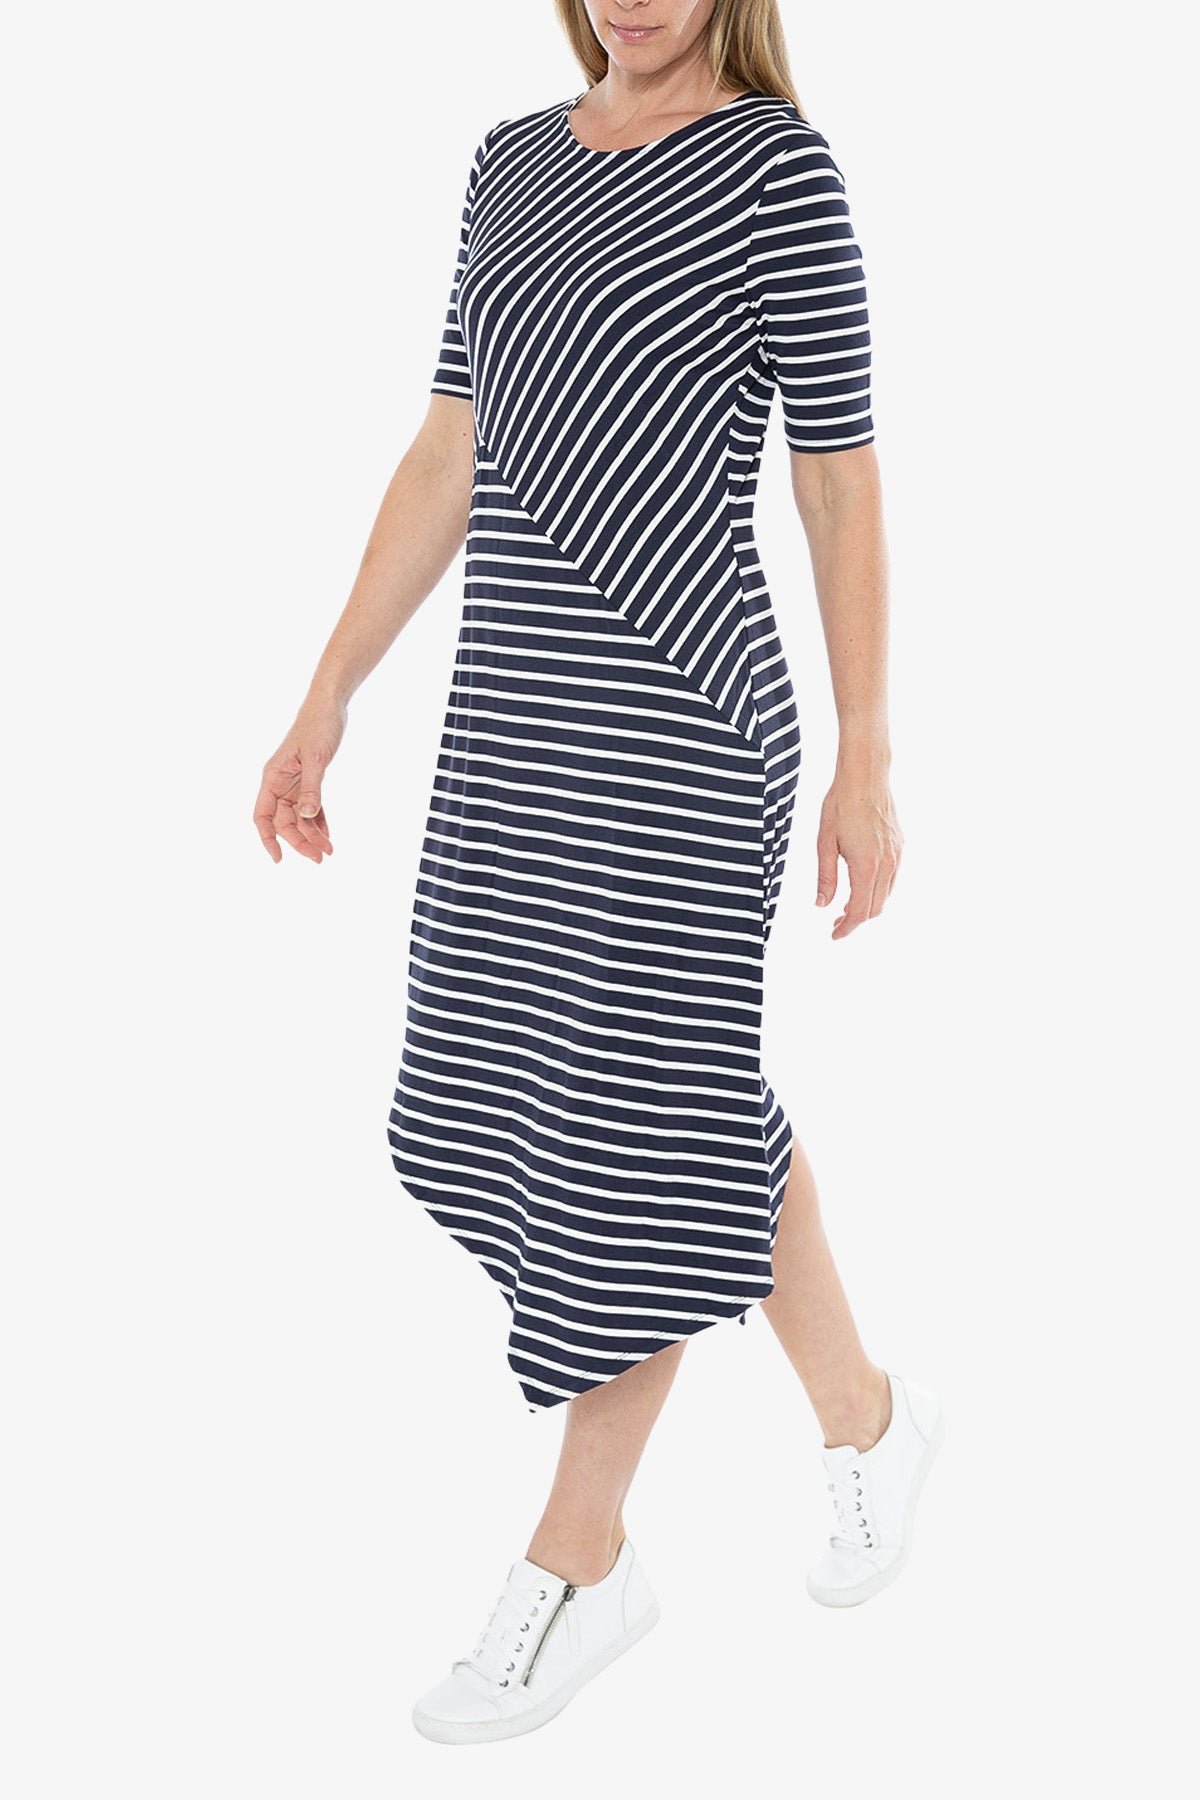 Elbow Sleeve Spliced Stripe Dress Navy and Ivory